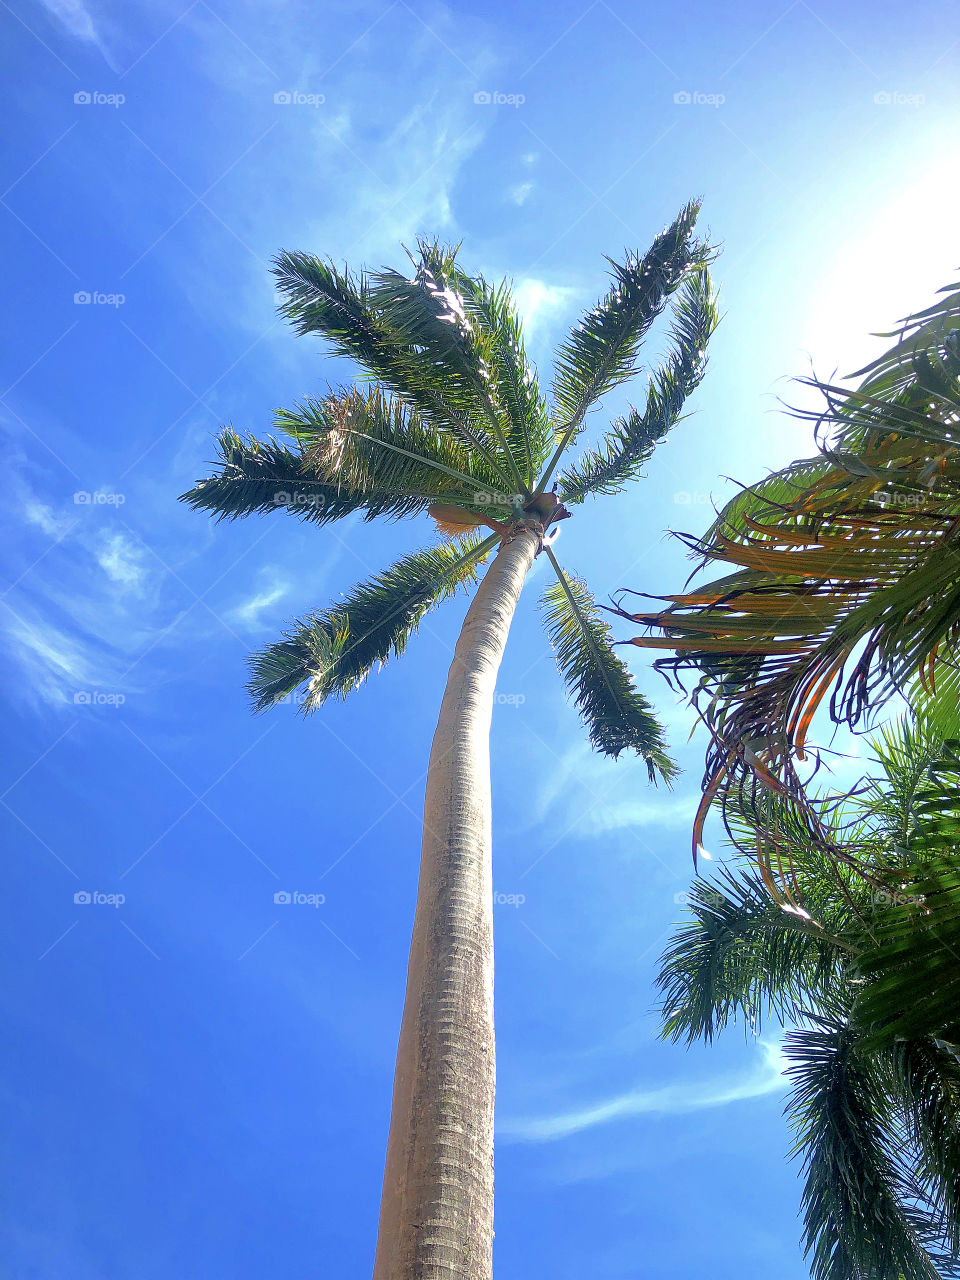 Palm trees: Jamaica